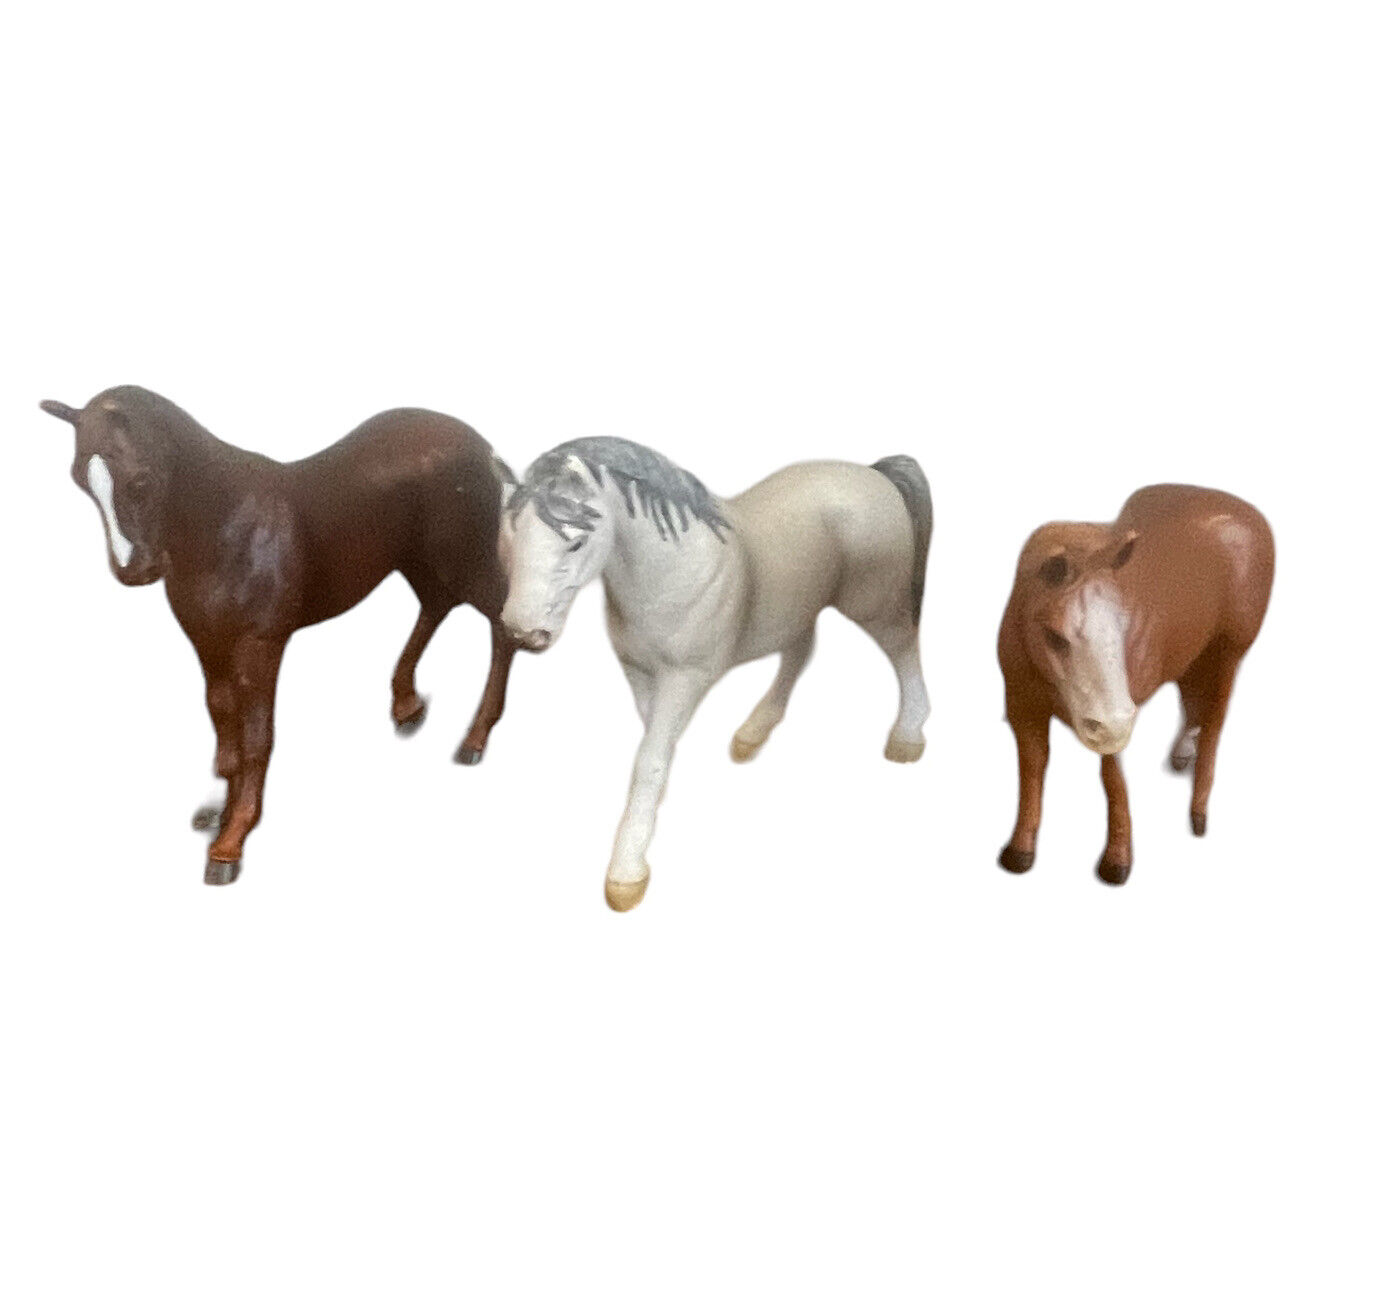 Schleich Papa Horses Figurines Horses 2000 2001 2013 Arabian brown white